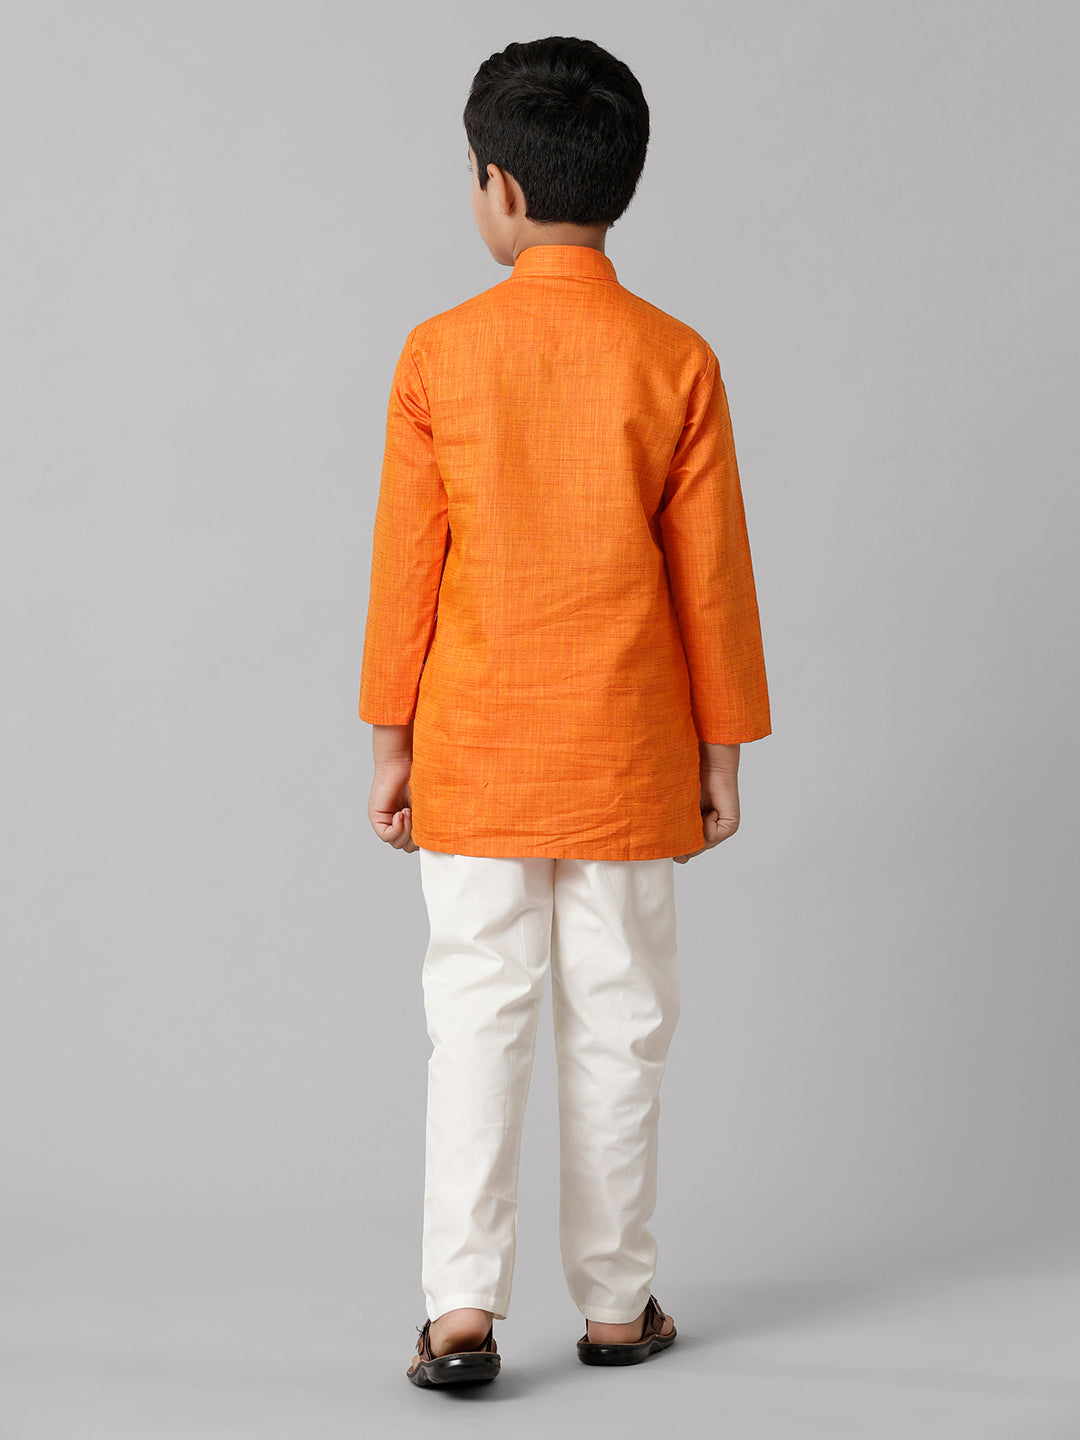 Boys Cotton Full Sleeves Orange Kurta with Cream Pyjama Pant Combo FS3-Back view